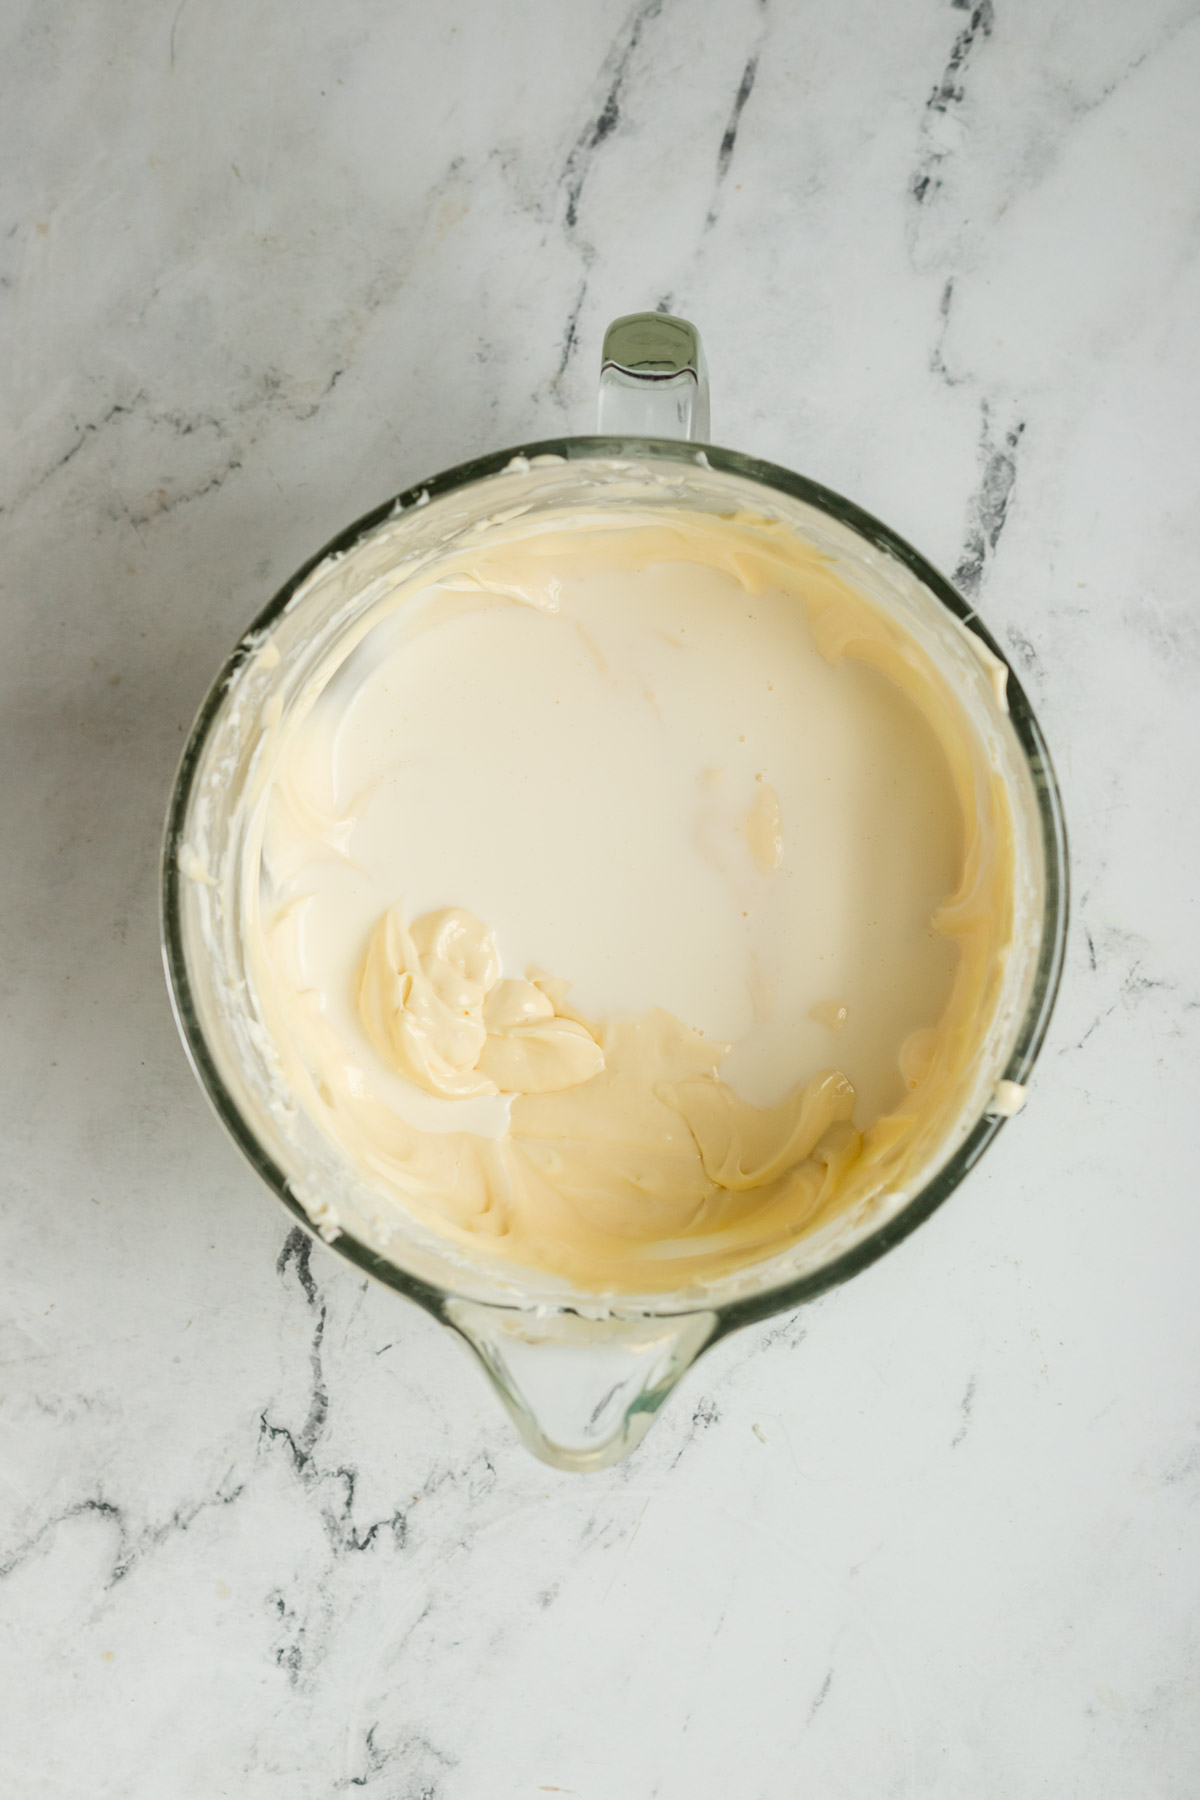 heavy cream added to cream cheese mixture